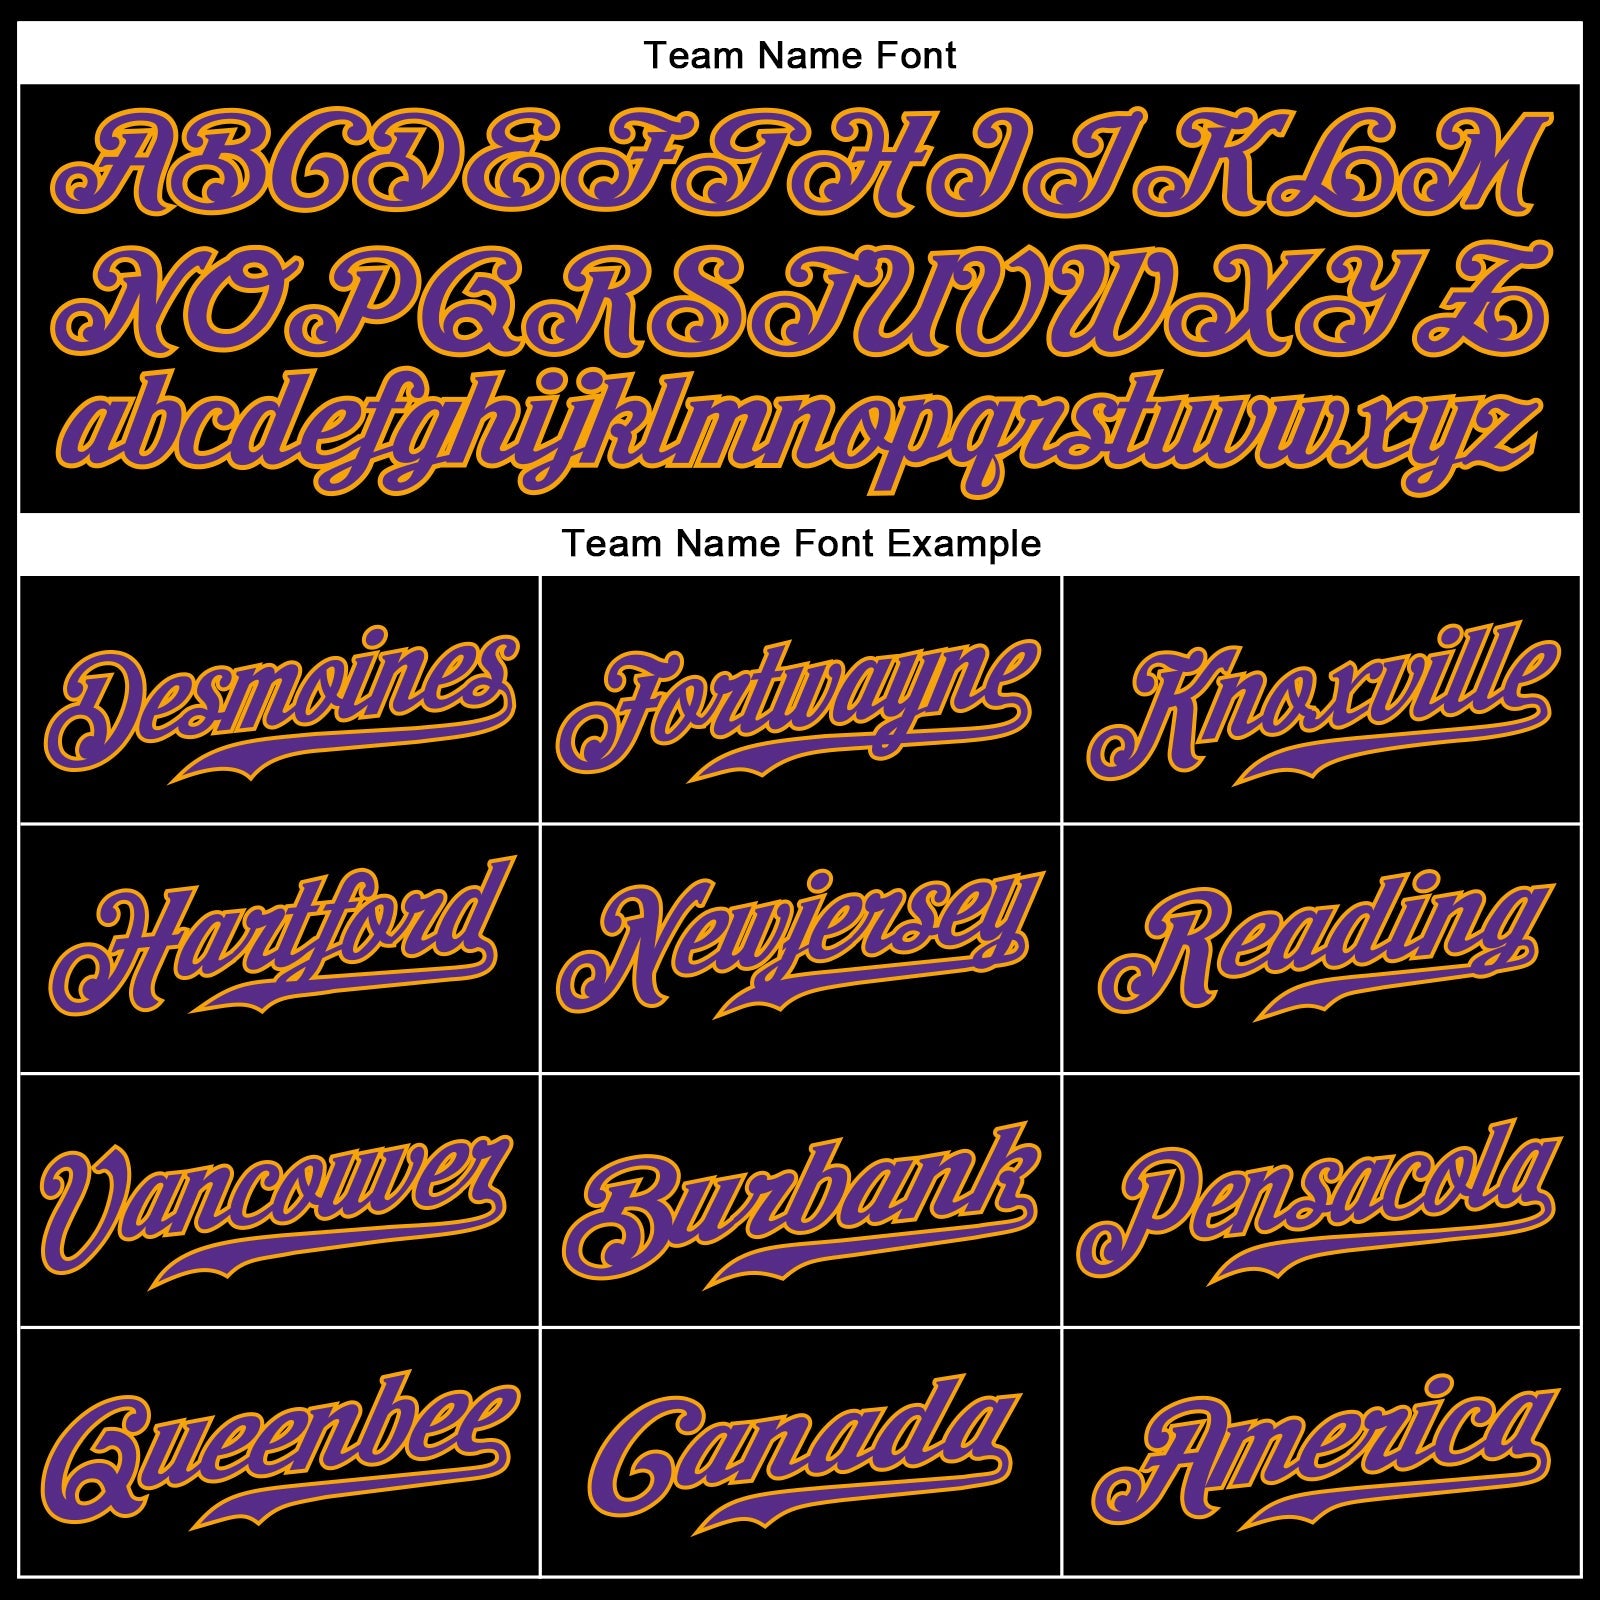 Custom Black Purple-Gold Authentic Sleeveless Baseball Jersey